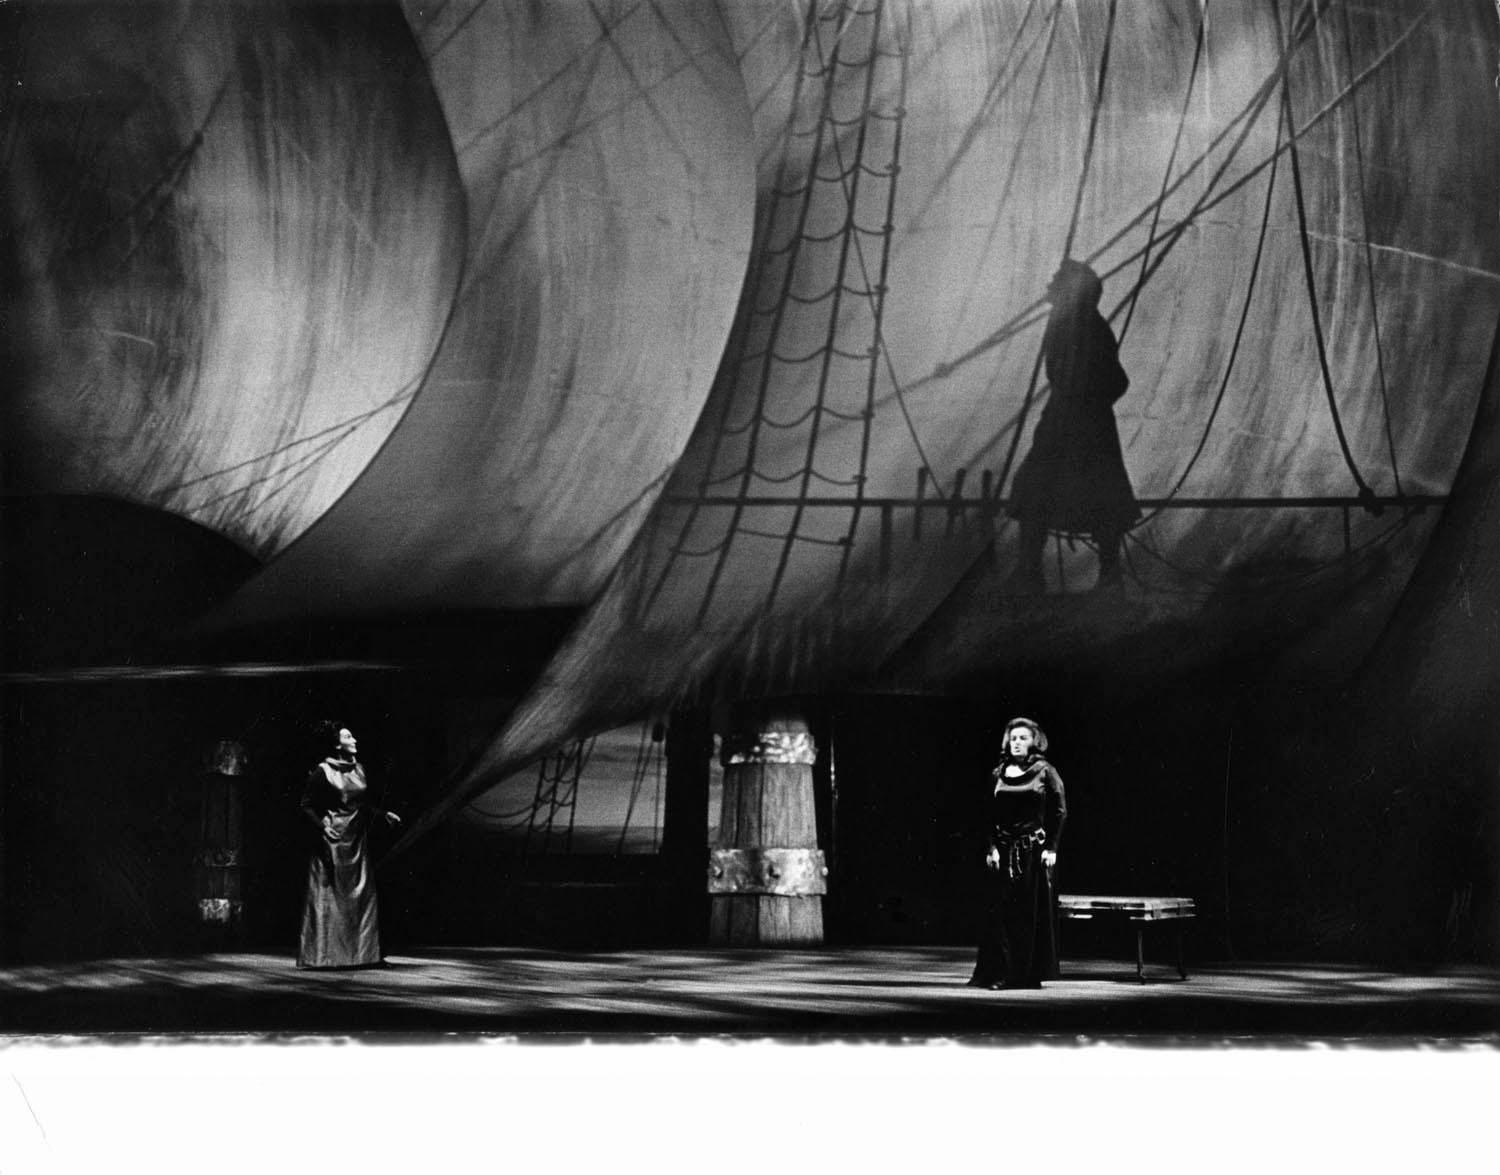 Jack Mitchell Black and White Photograph - Mignon Dunn, Birgit Nilsson in 'Tristan und Isolde' at the Metropolitan Opera